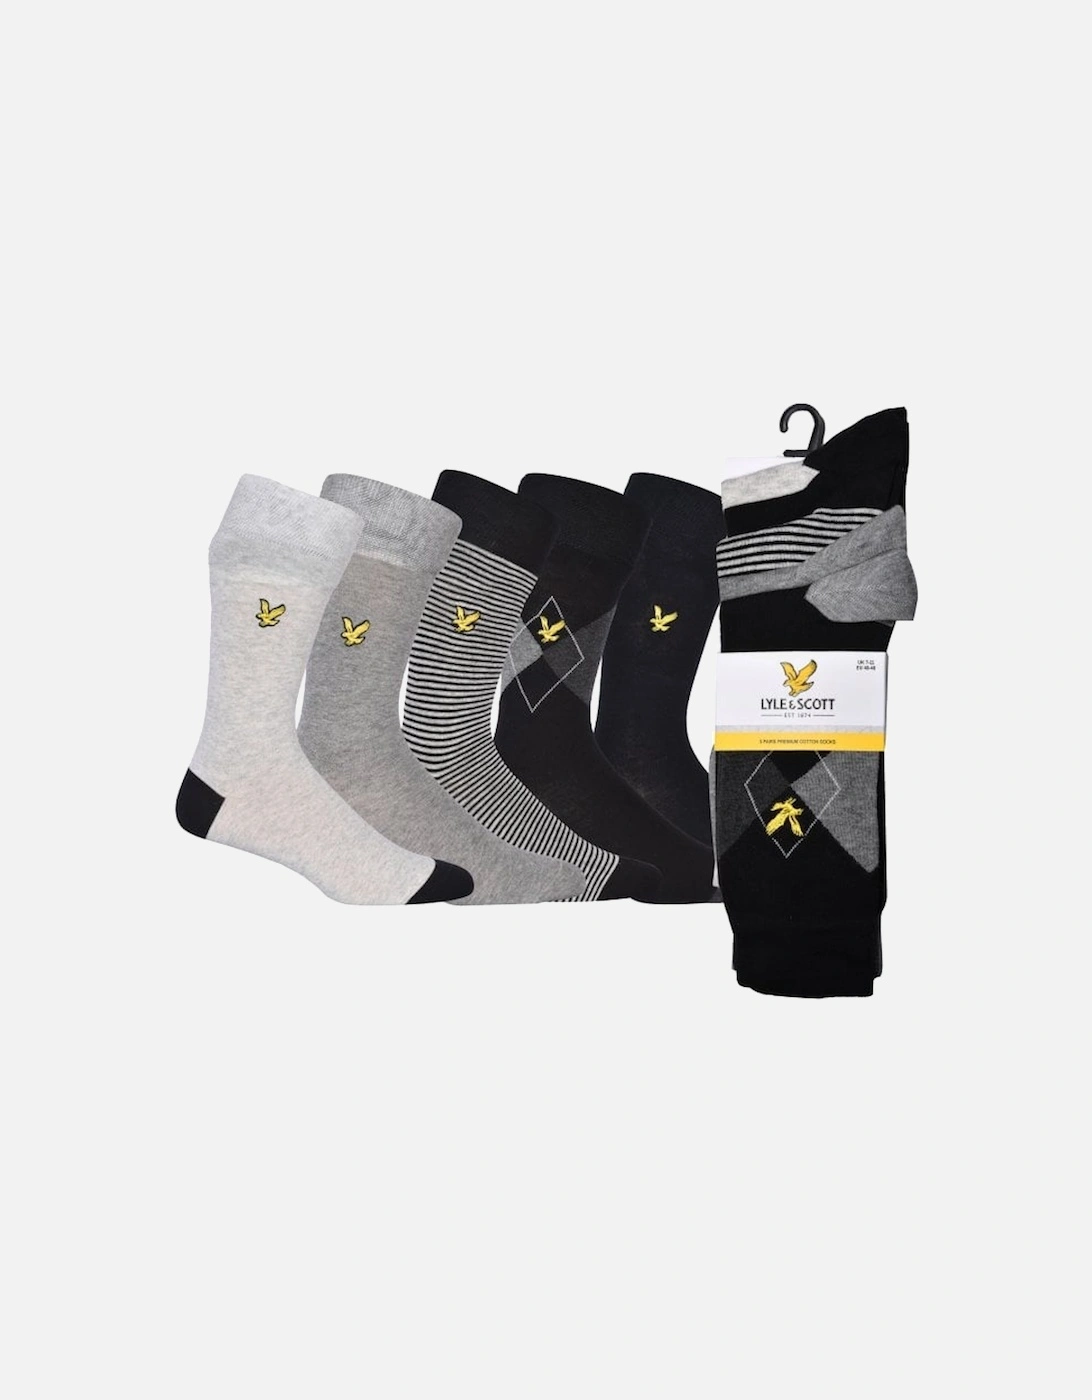 5-Pack Mixed Style Socks, Black/Grey